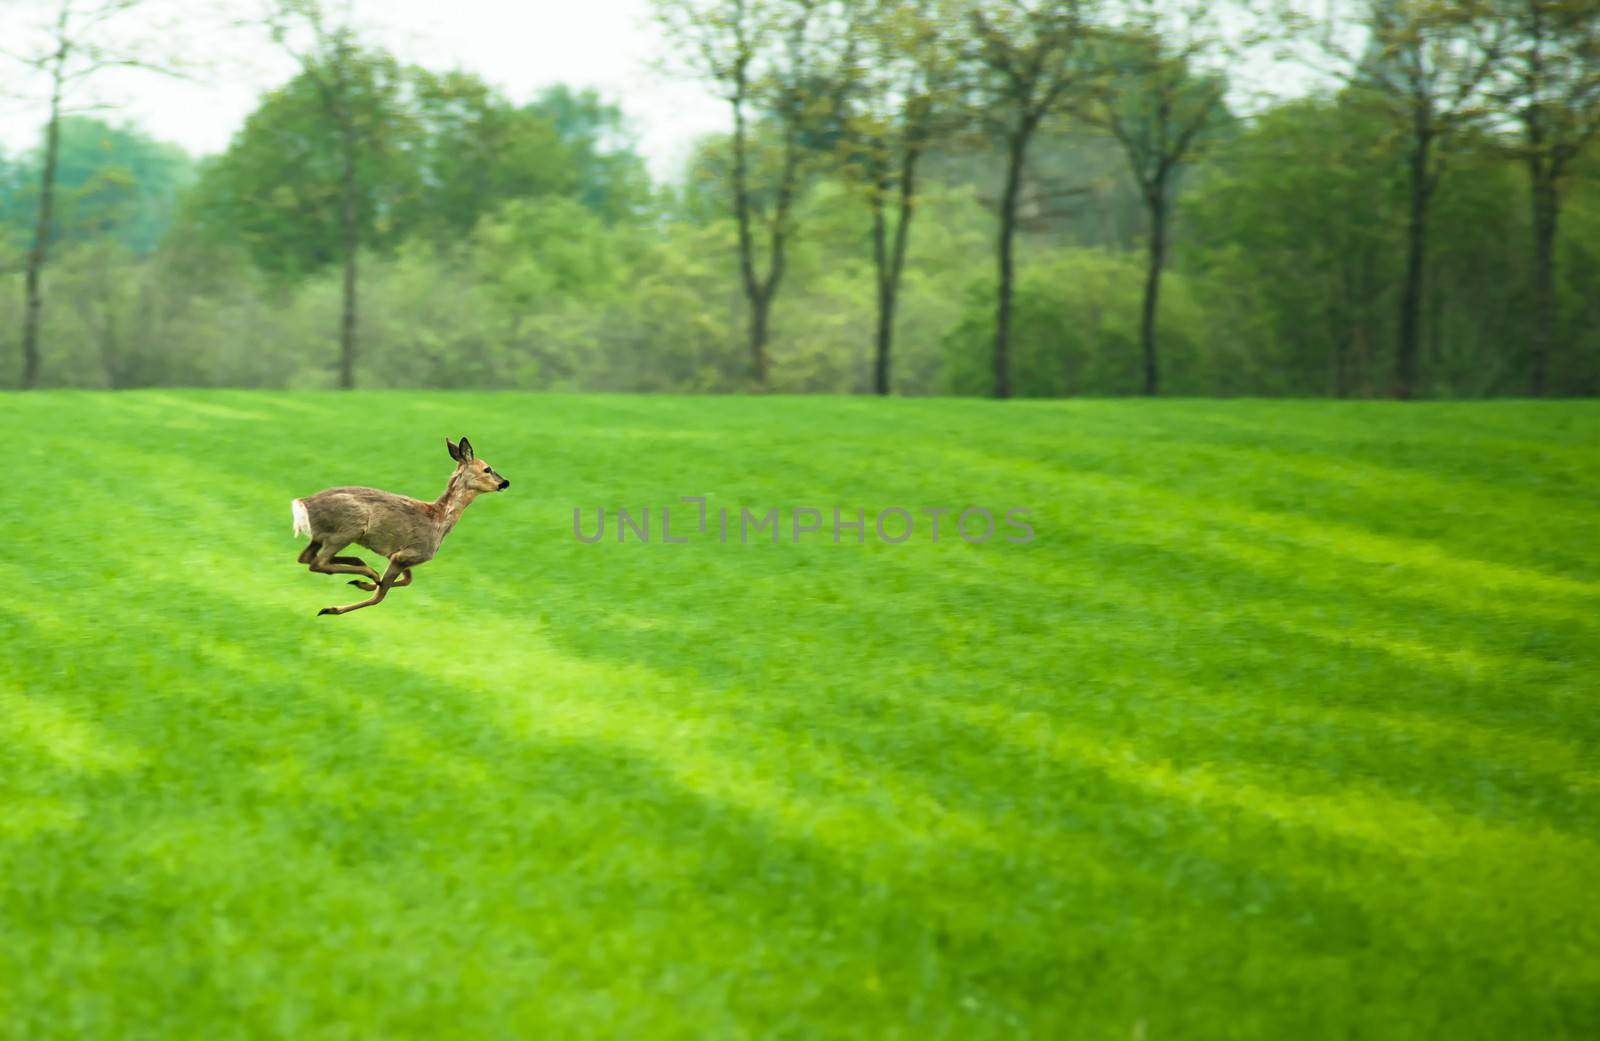 Deer running across a field in daytime